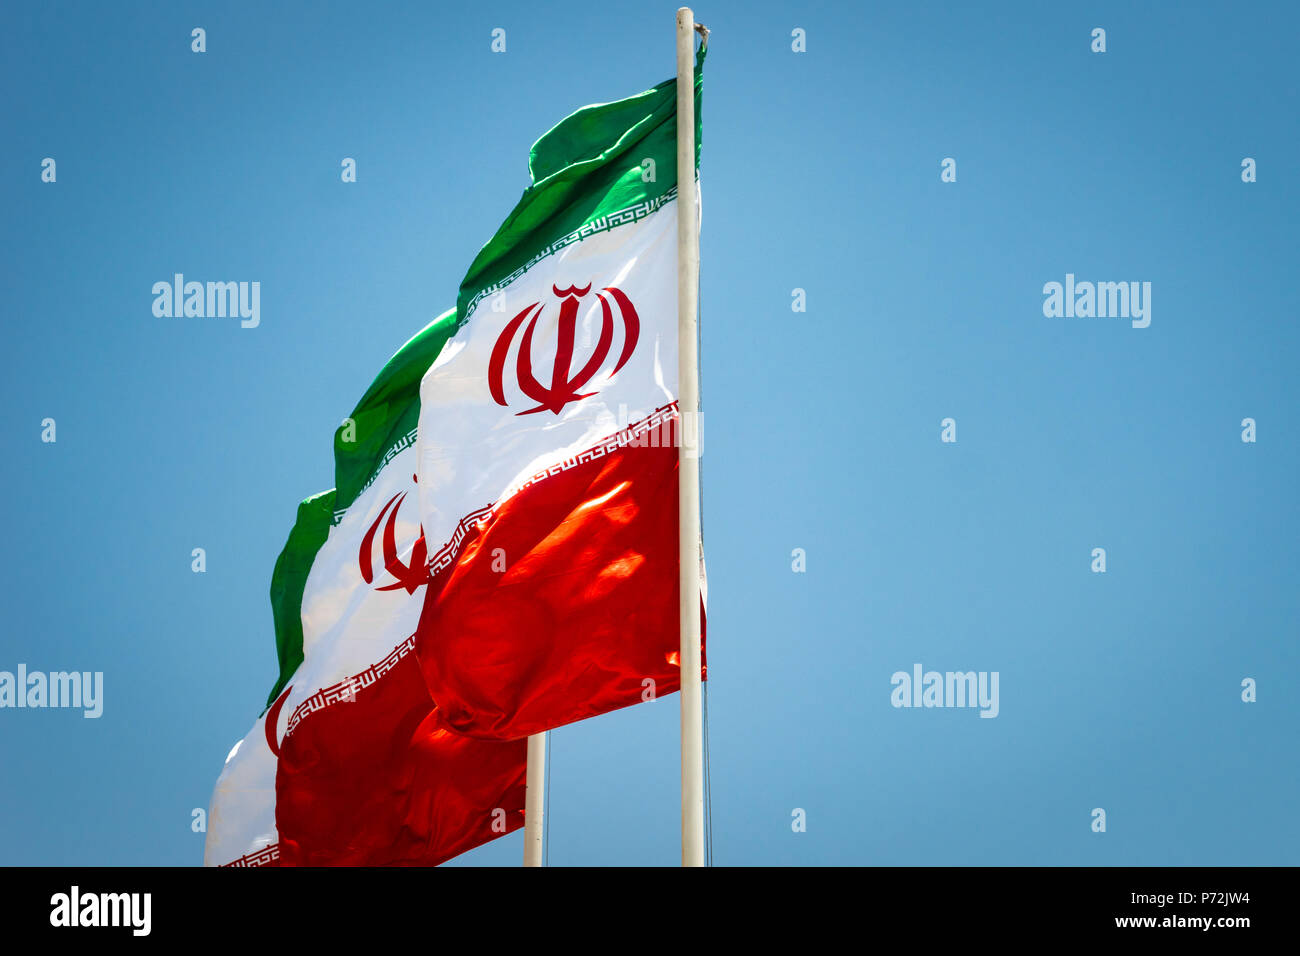 Iranian flags, flags of Islamic Republic of Iran, waving against blue sky Stock Photo